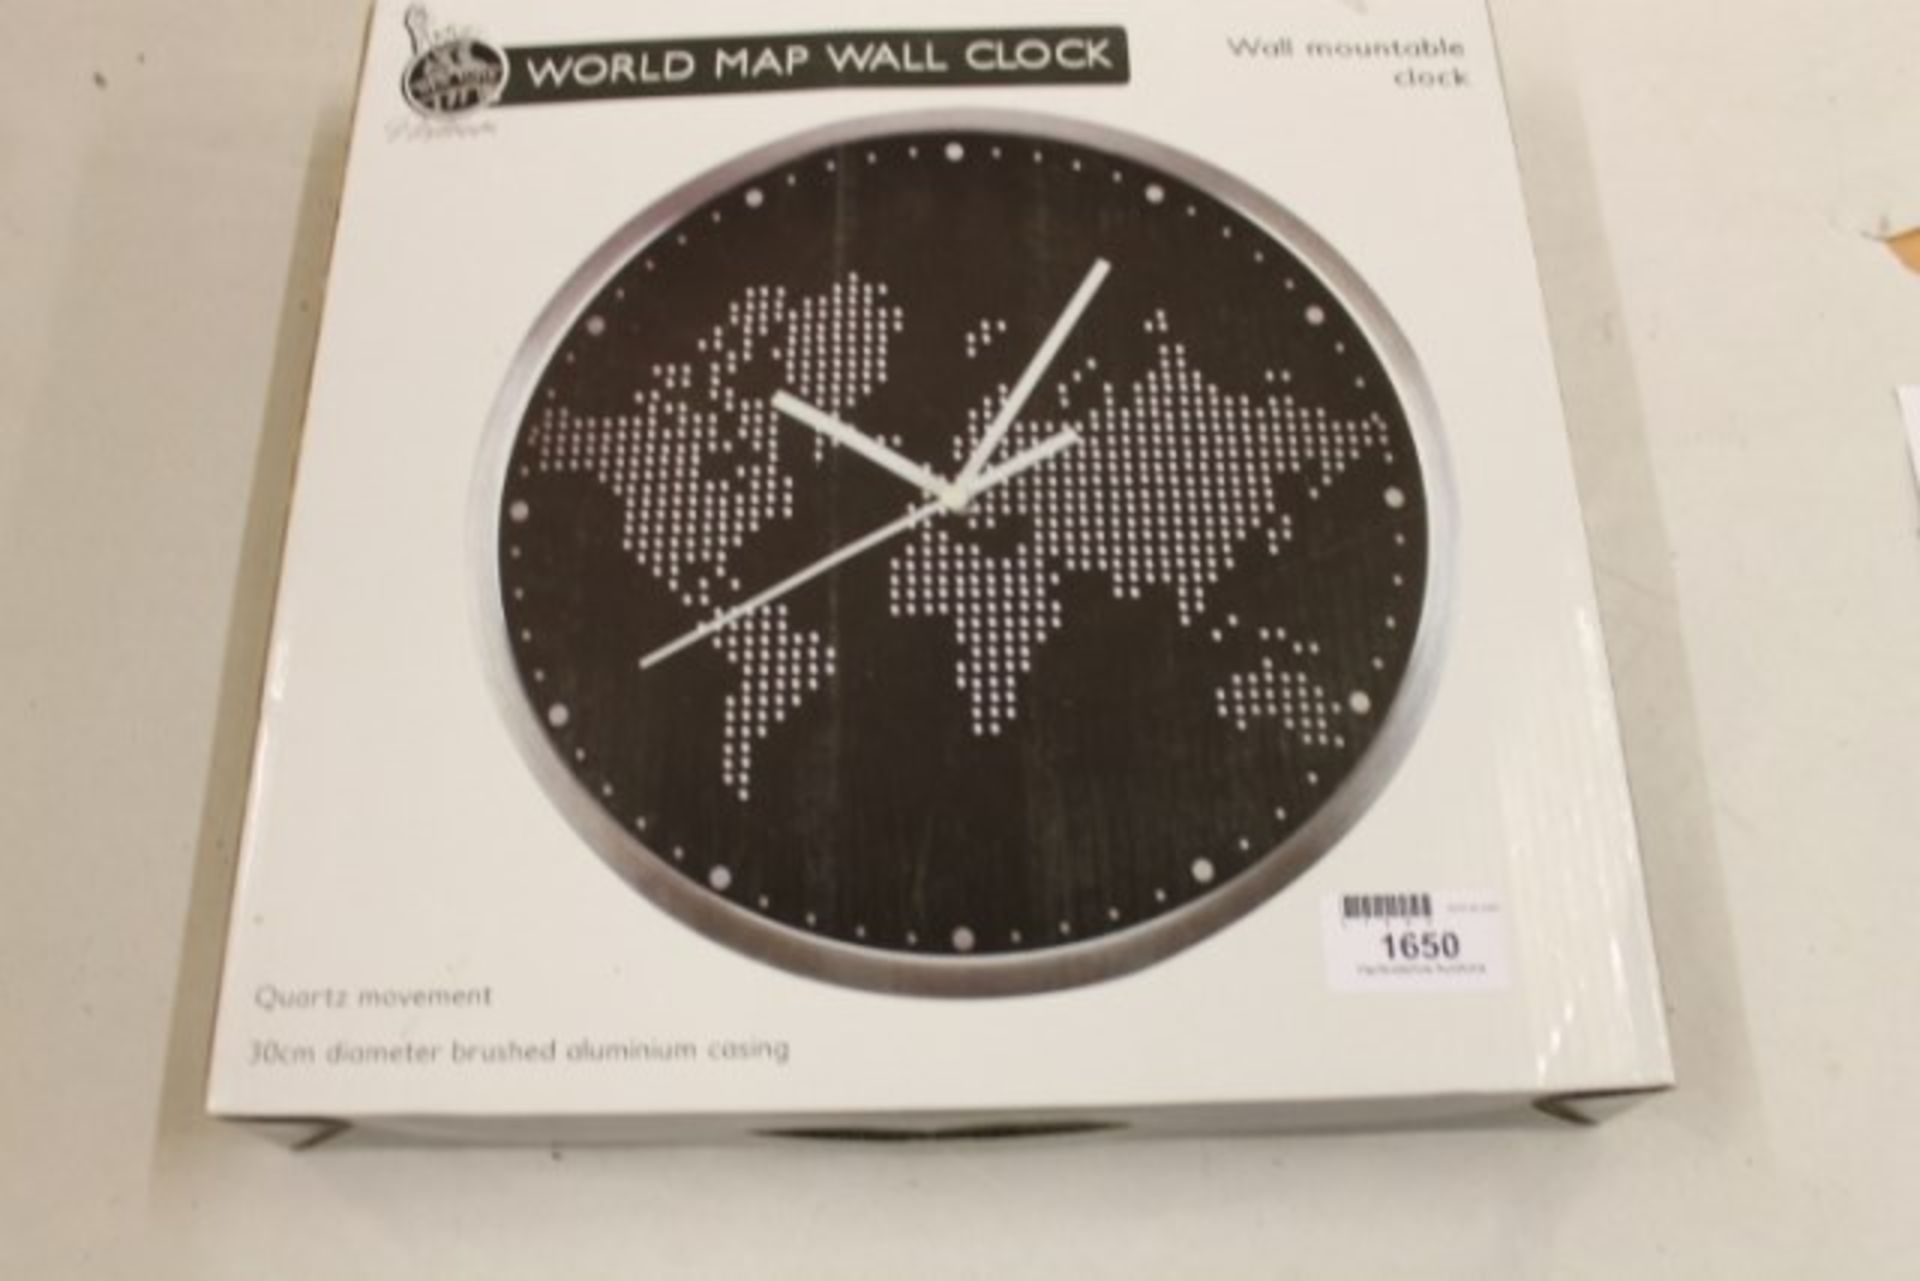 V Grade B Brushed Aluminium Cased 30cm World Map Wall Clock RRP39.99 X 2 Bid price to be